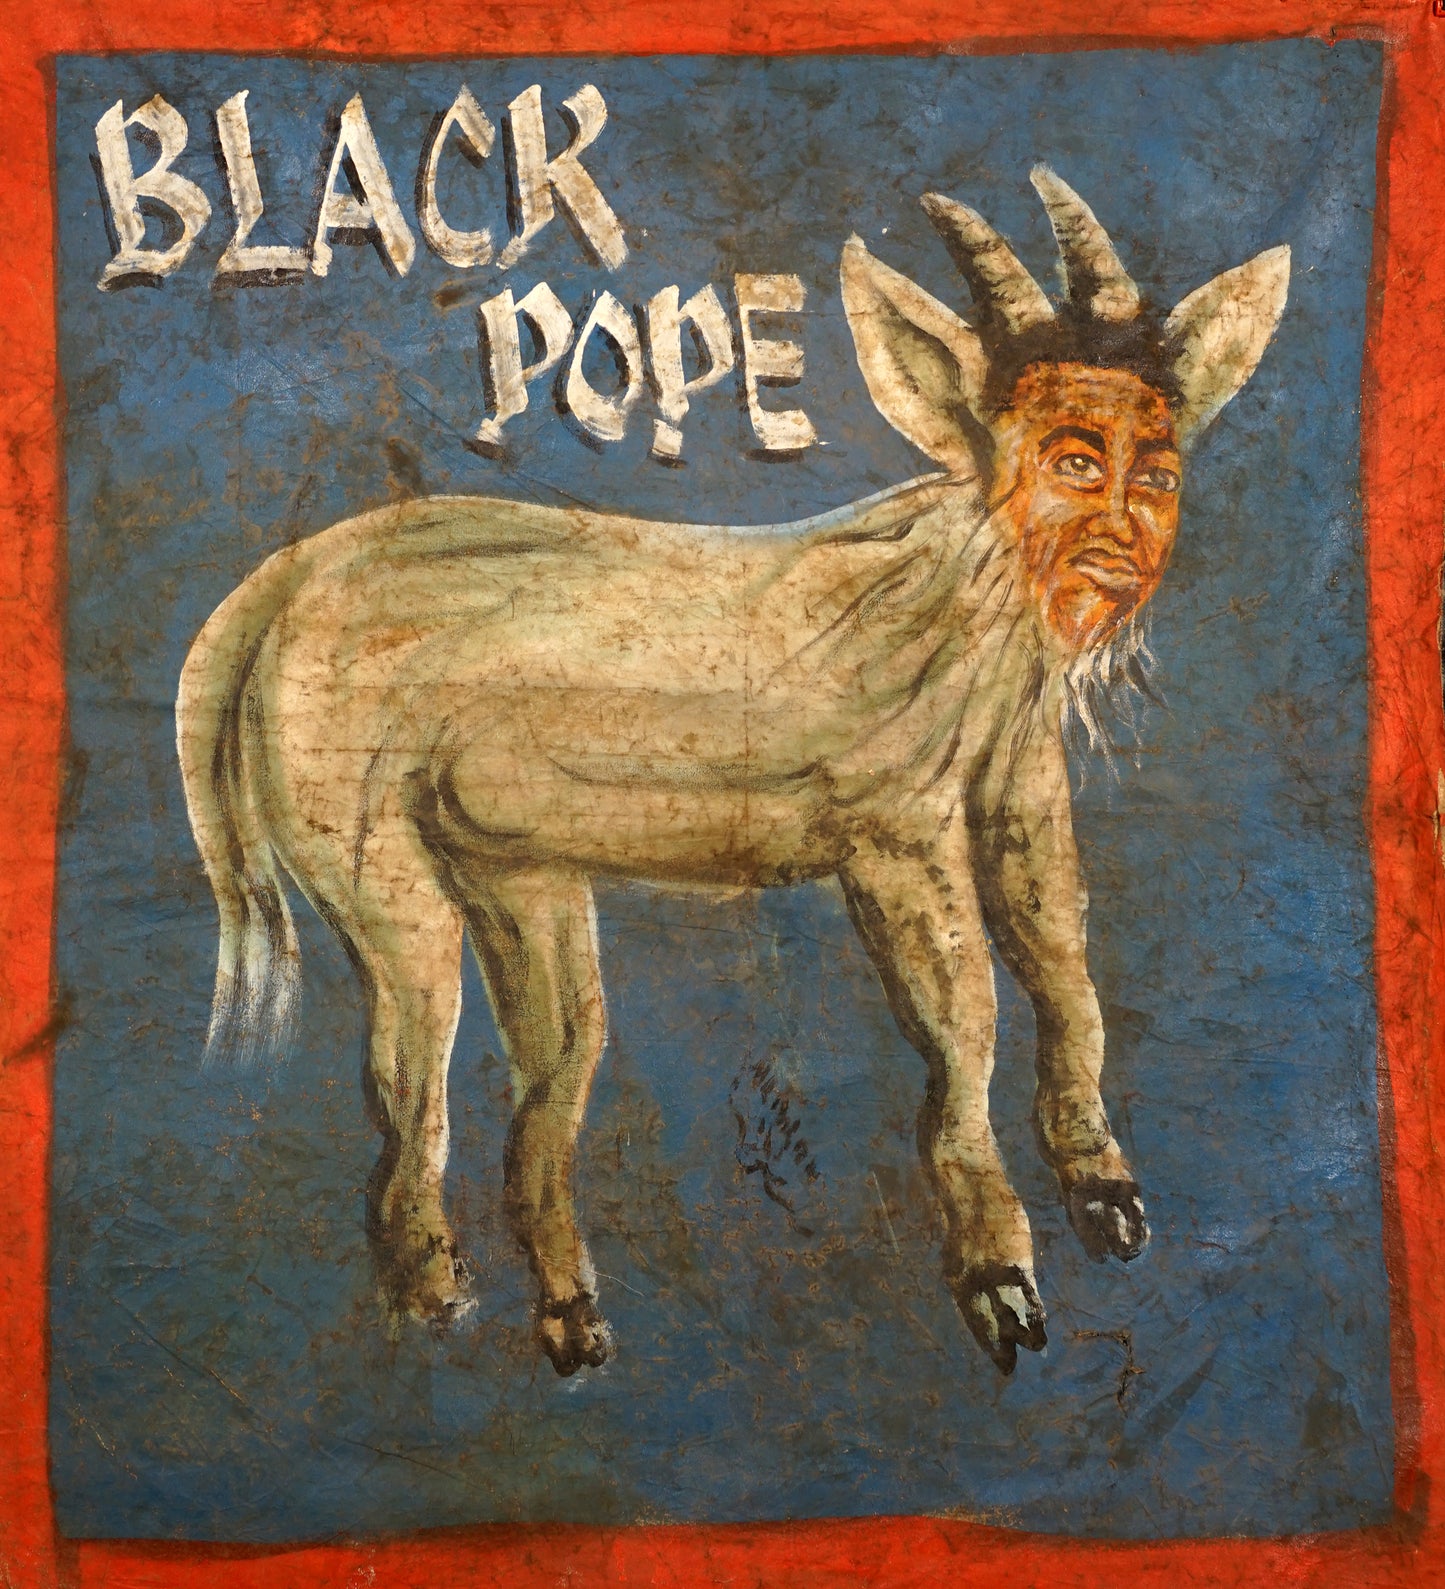 "Black Pope" by Mr. Brew